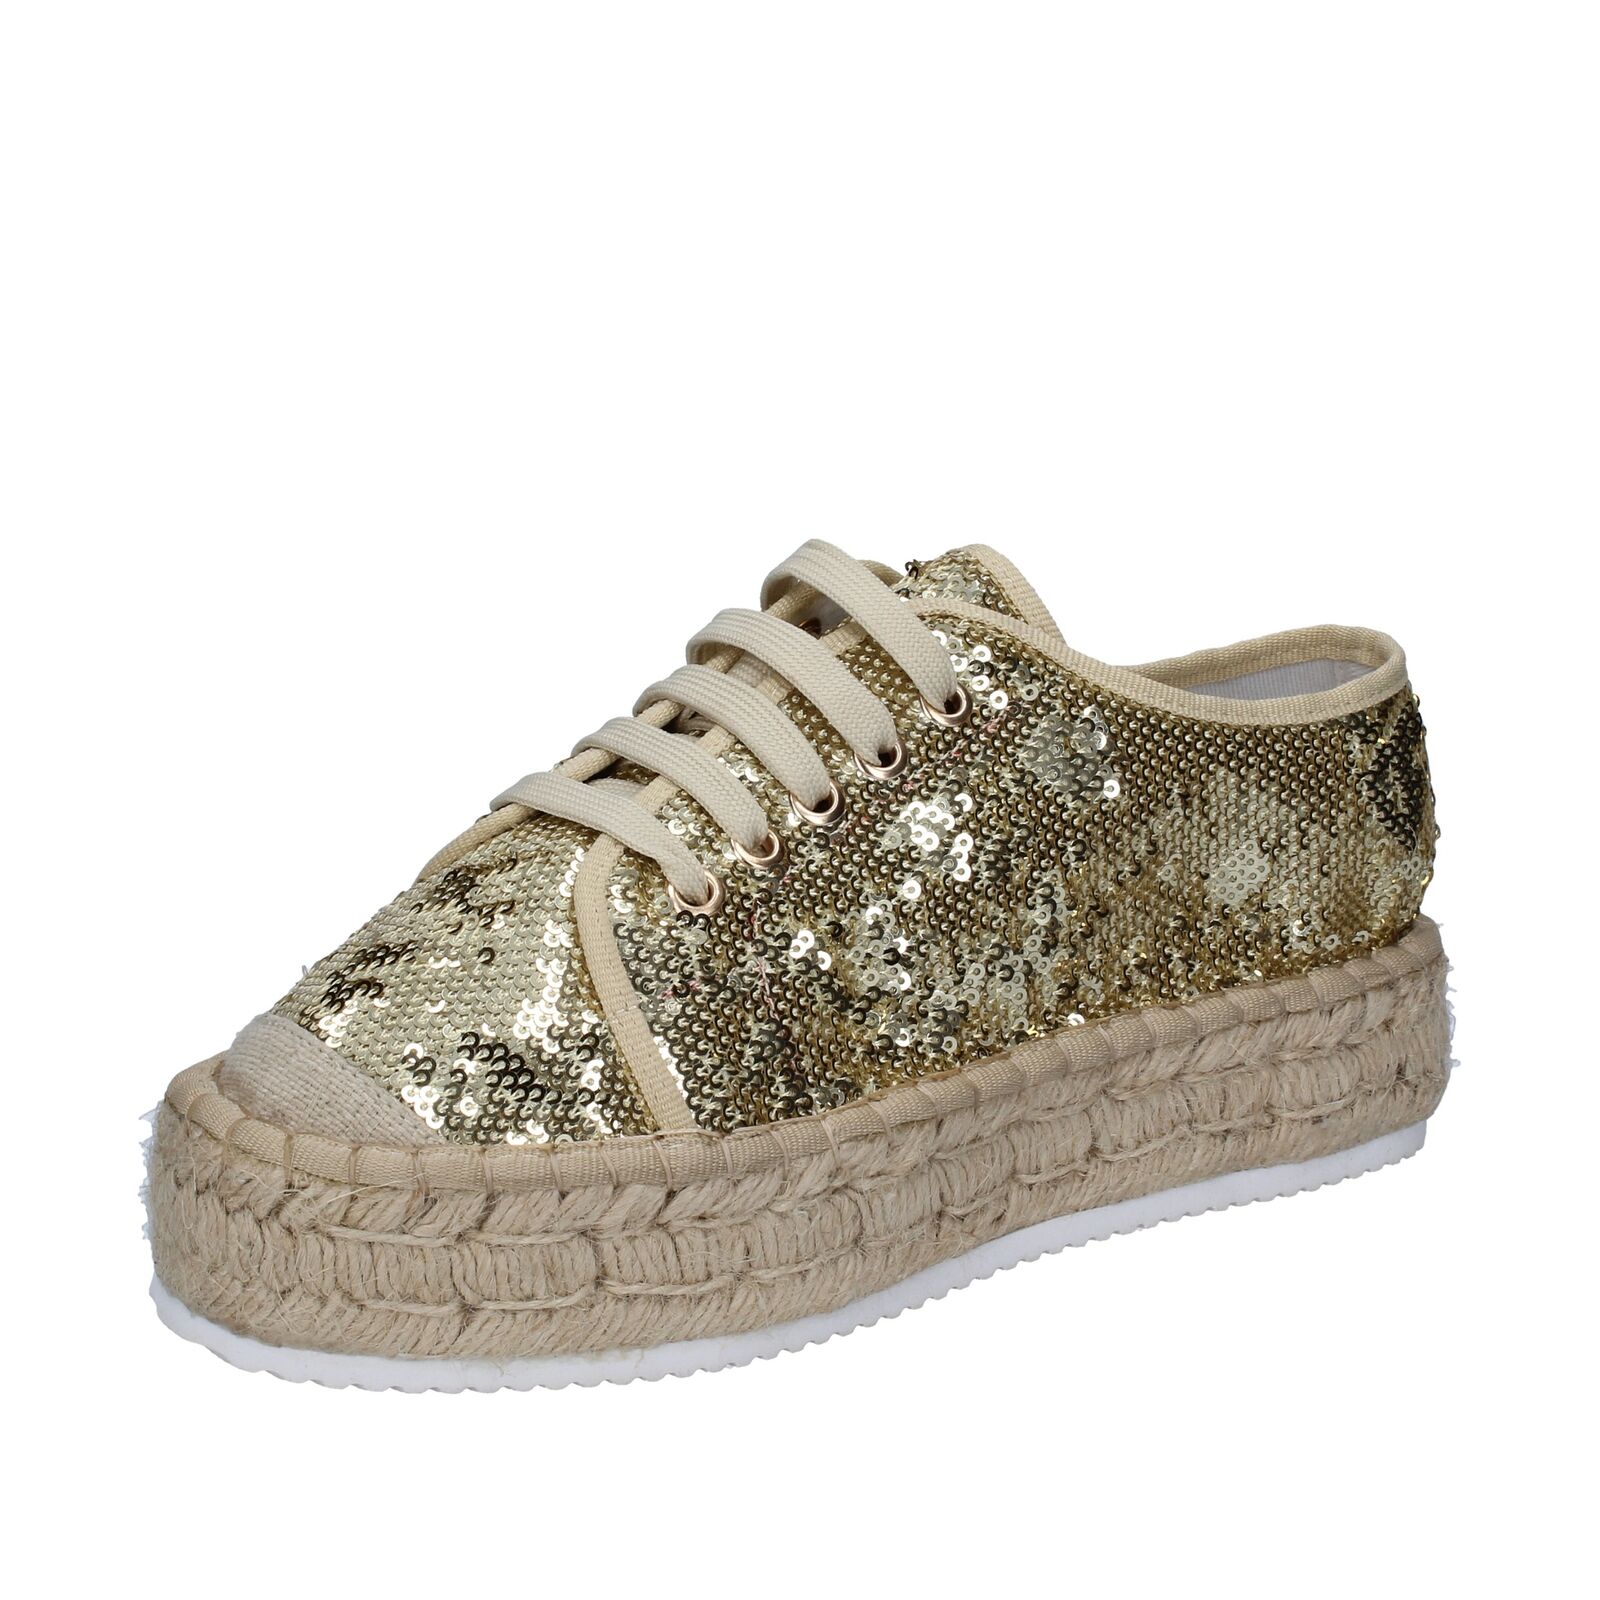 shoes FRANCESCO MILANO sneakers platinum textile sequins BS77 eBay